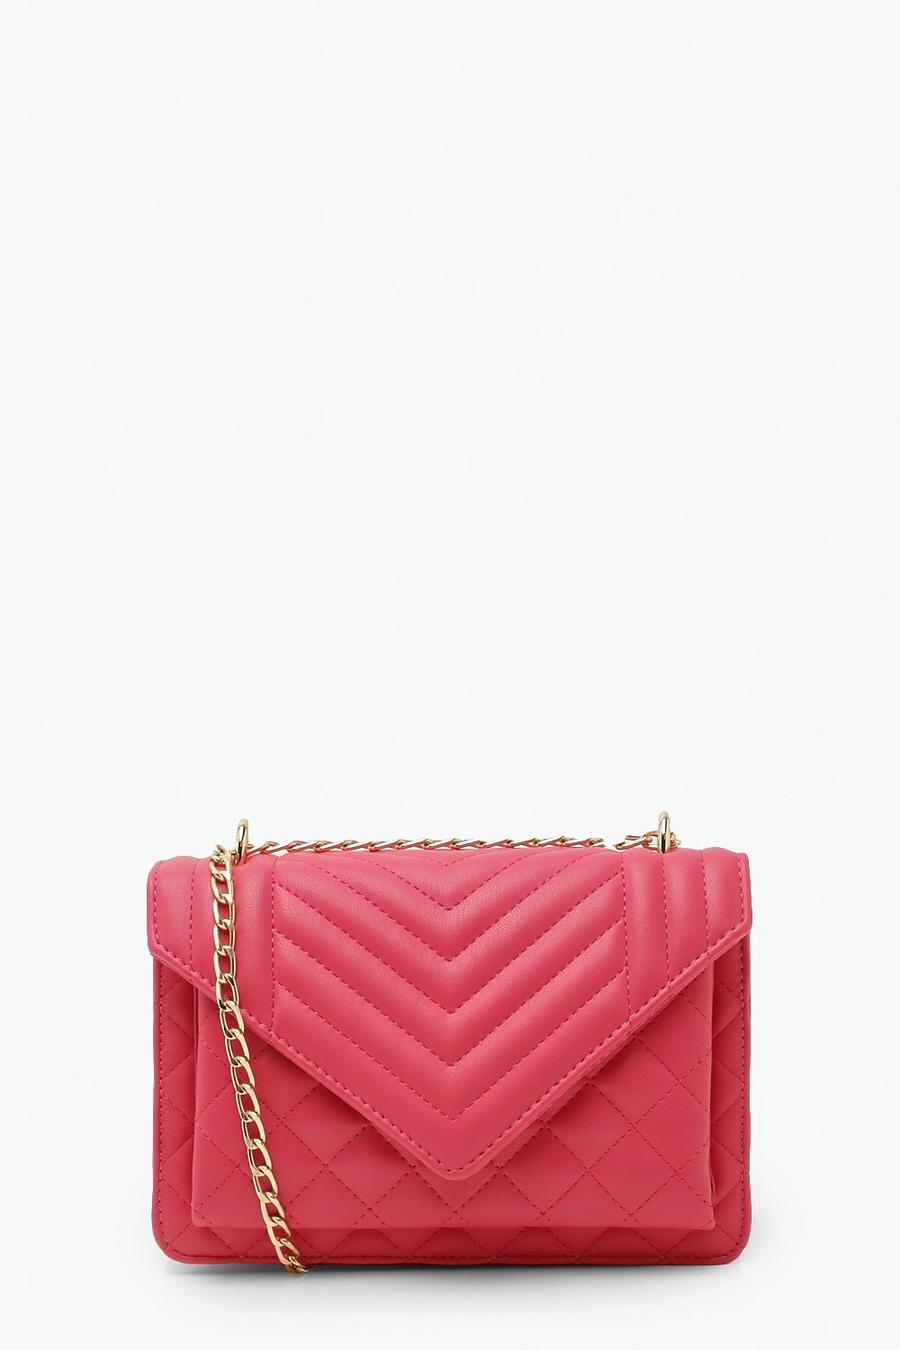 Hot pink Pink Quilted Chain Shoulder Bag